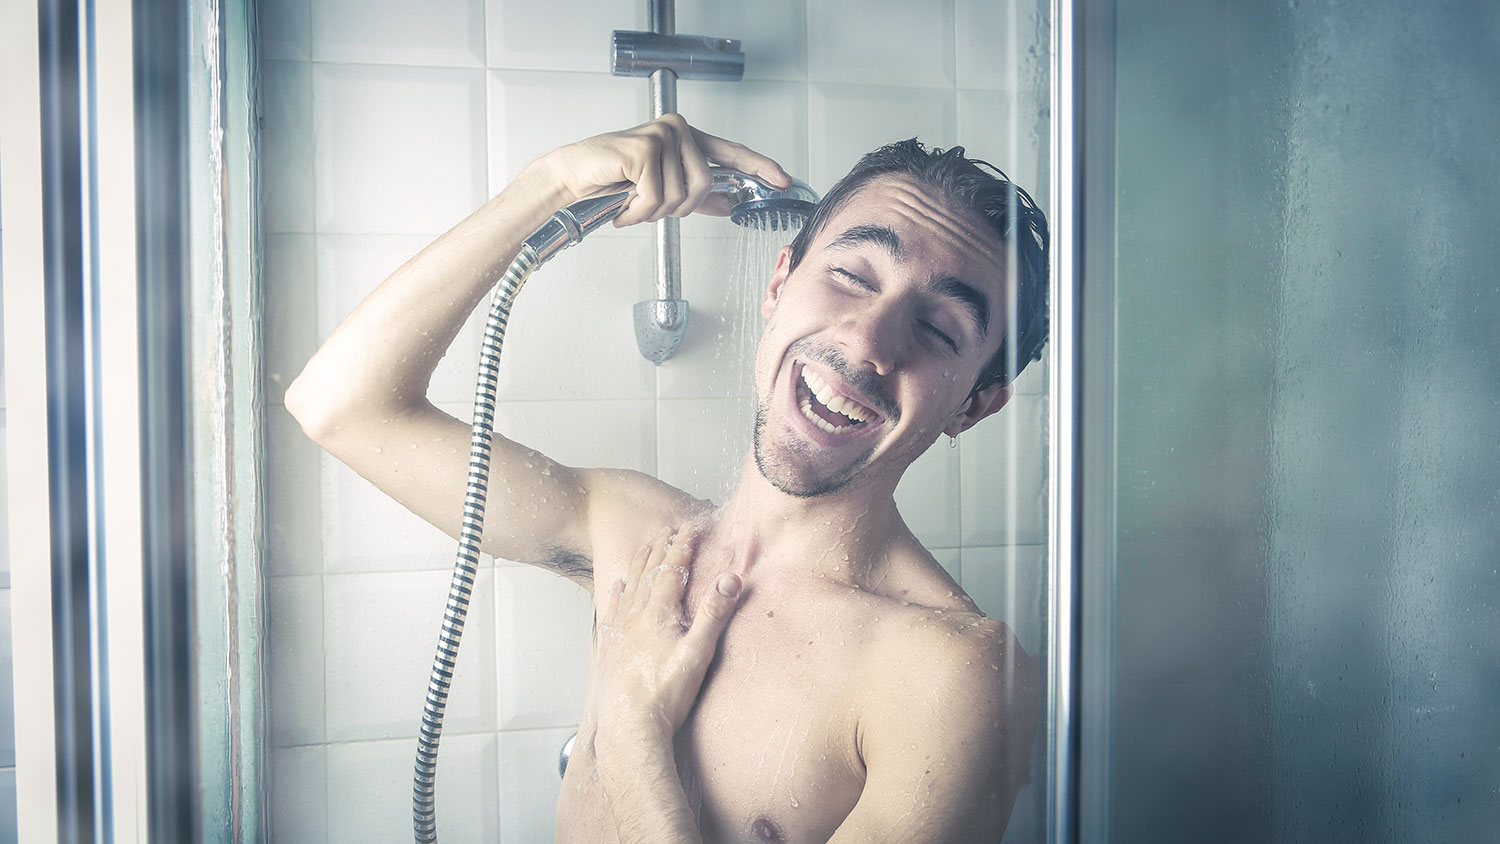 Teen angel nailed shower fan photos